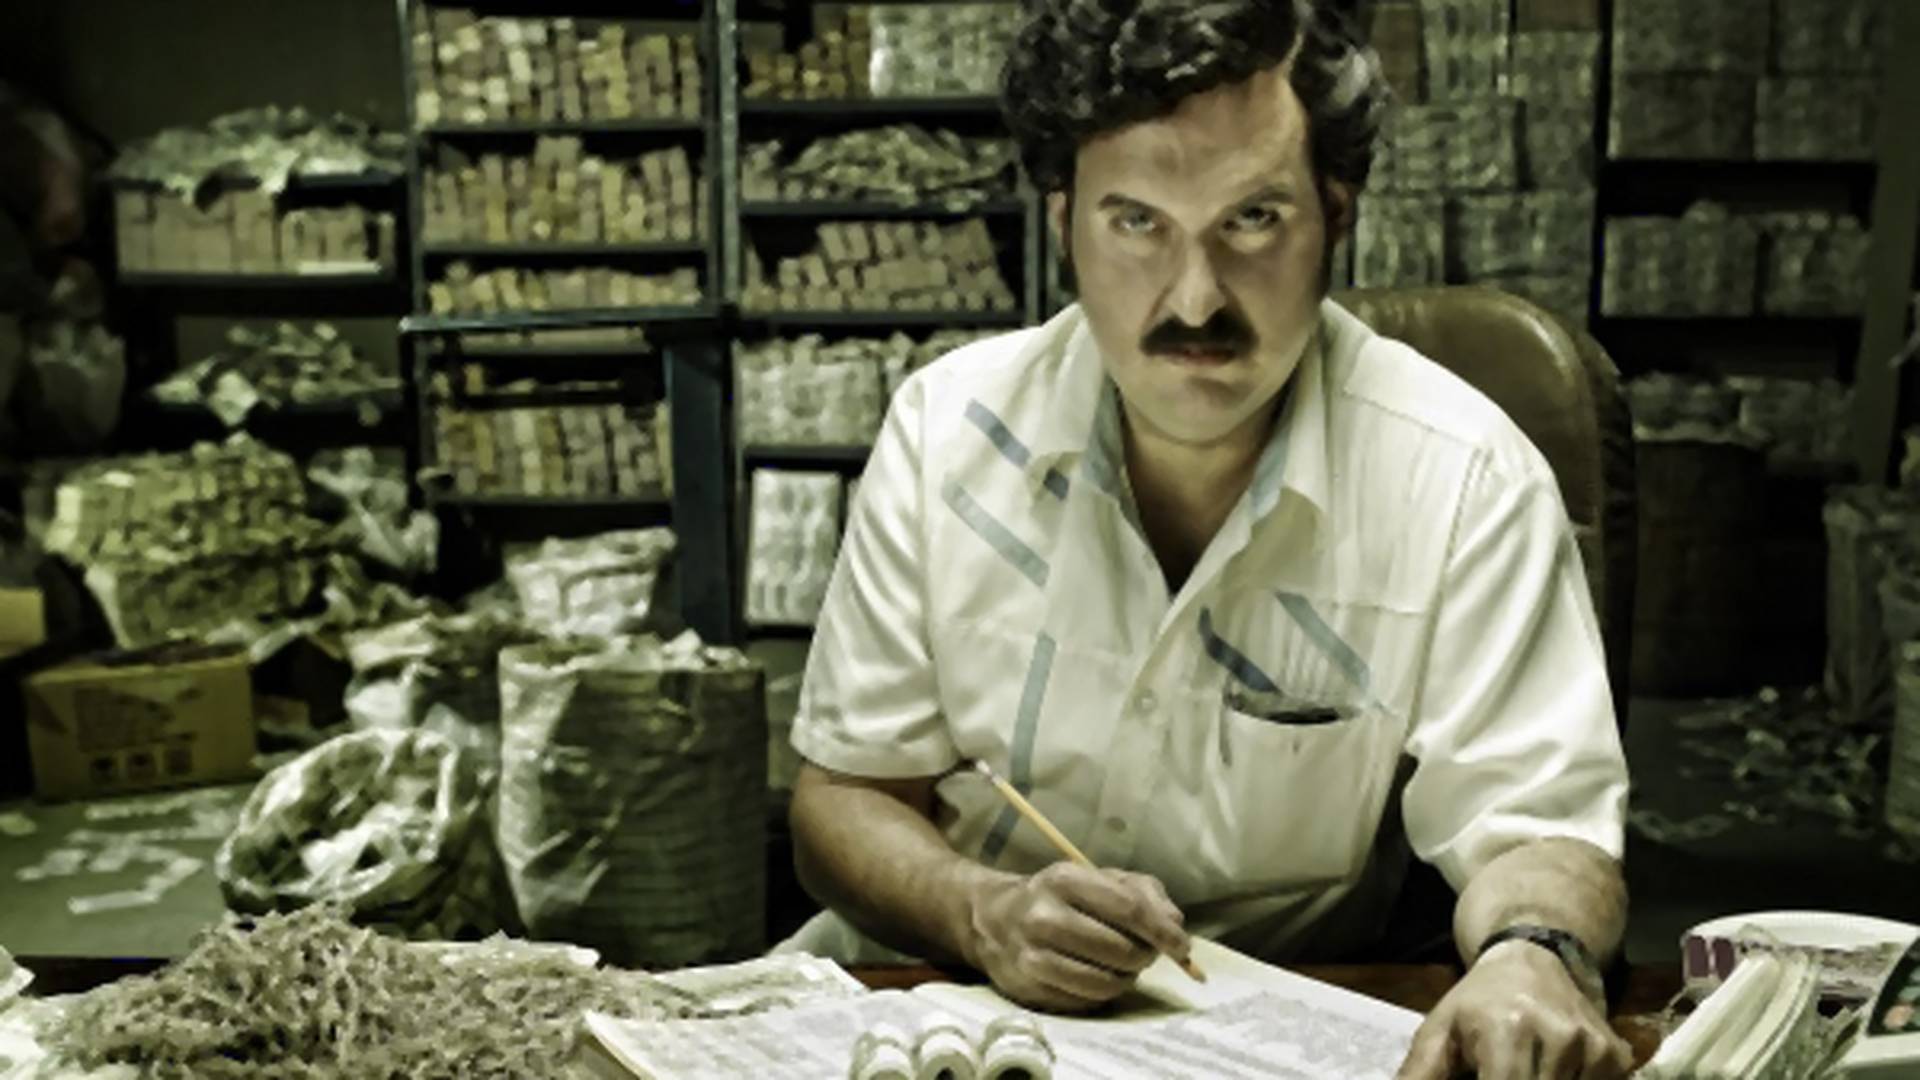 Spálil dva milióny dolárov, lebo jeho dcére bola zima: Príbeh kolumbijského narkobaróna Pabla Escobara vás dostane